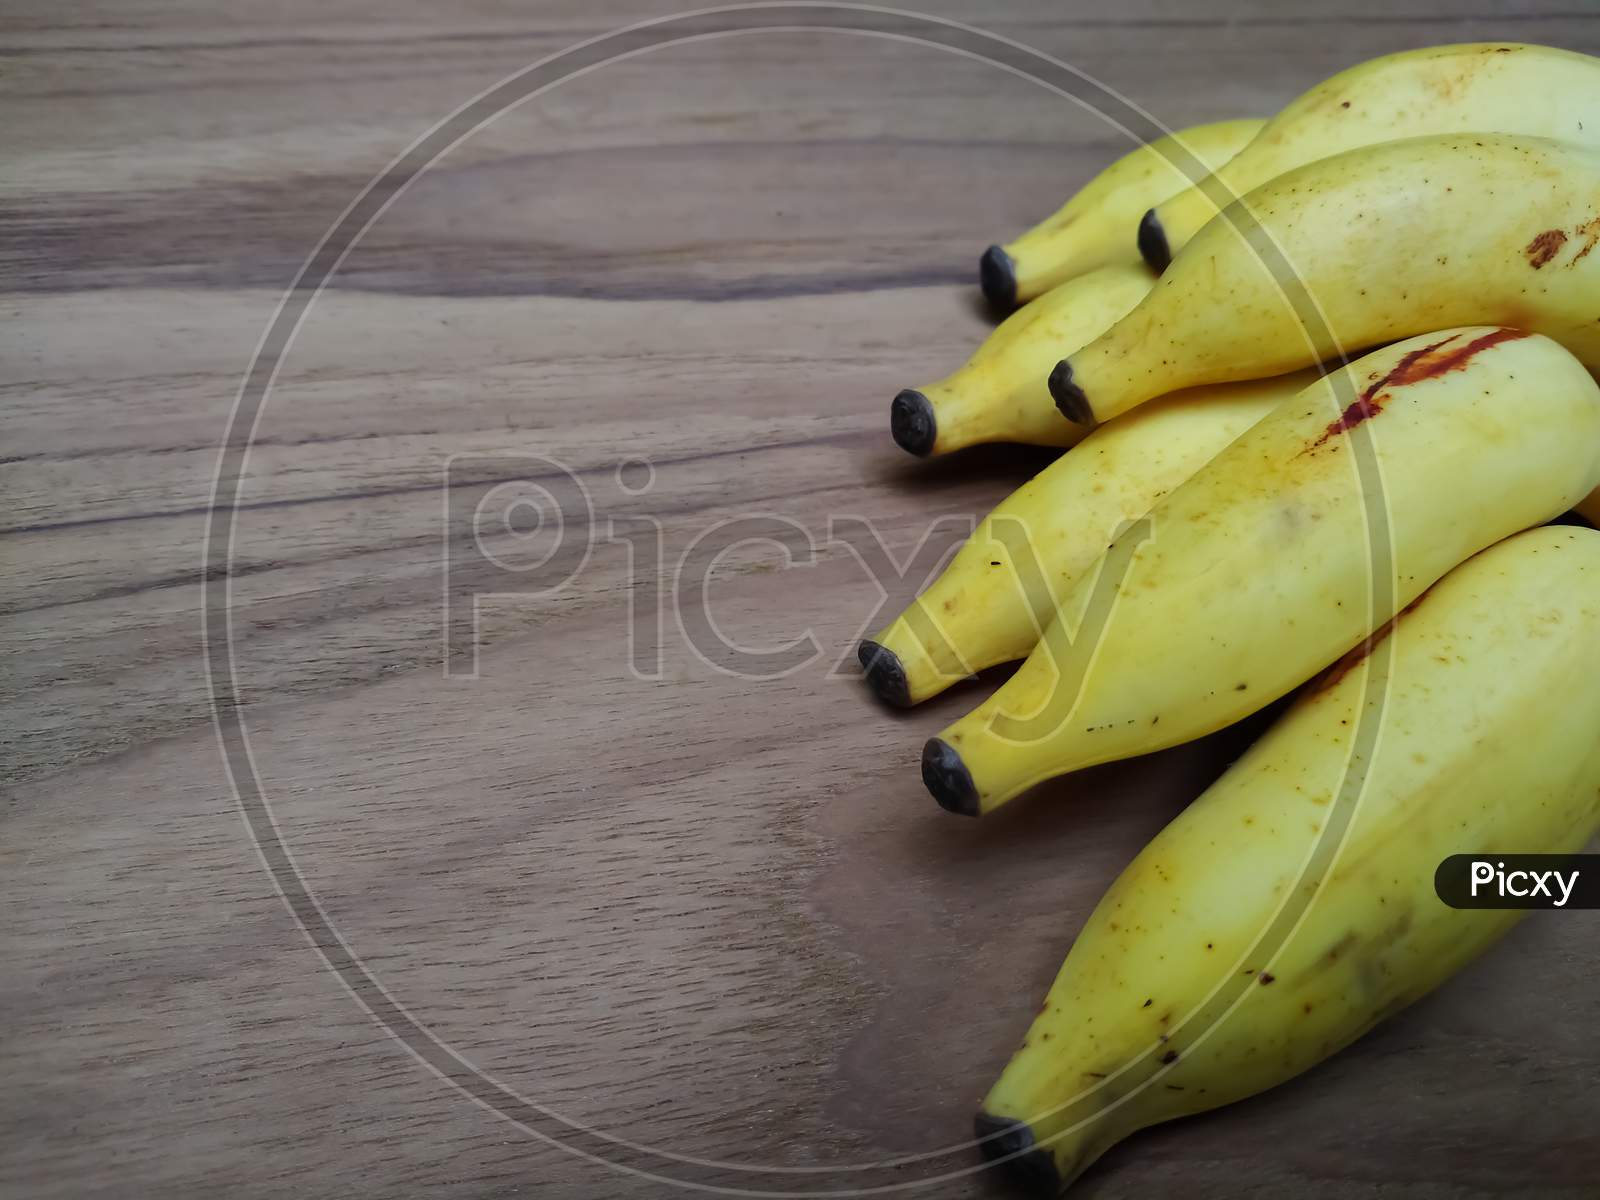 Fresh ripened banana on wooden background